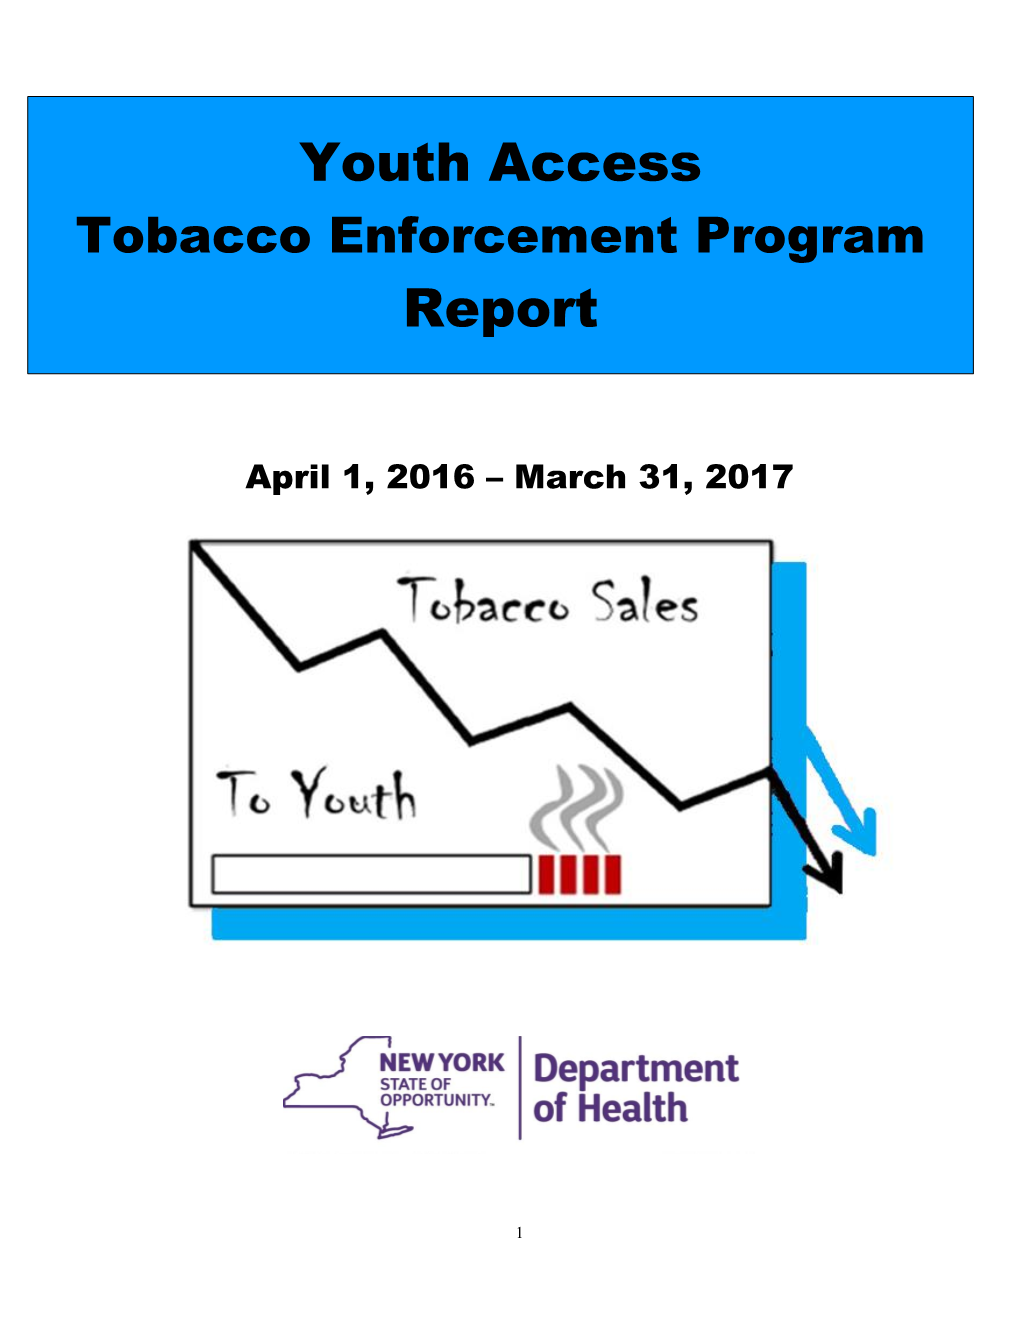 Tobacco Enforcement Program Annual Report April 1, 2016 – March 31, 2017